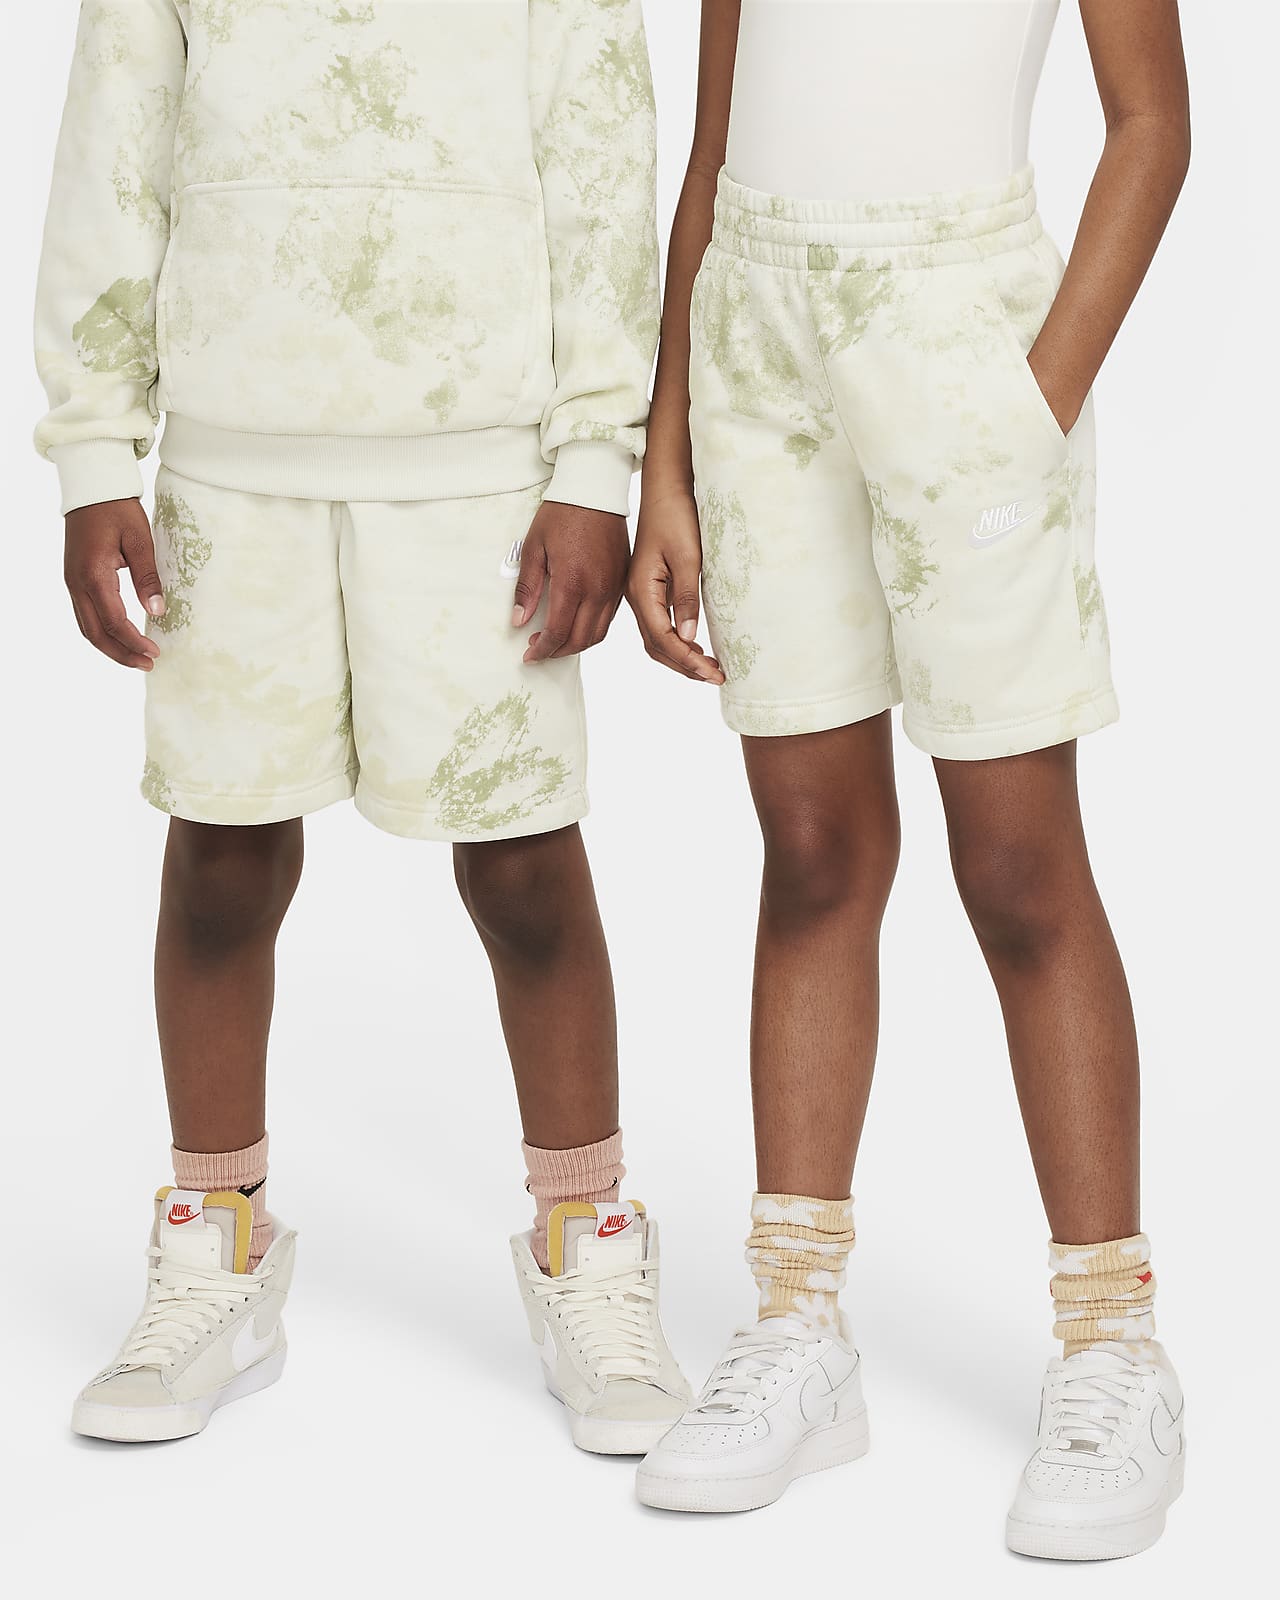 Shorts de French Terry para niños talla grande Nike Sportswear Club Fleece